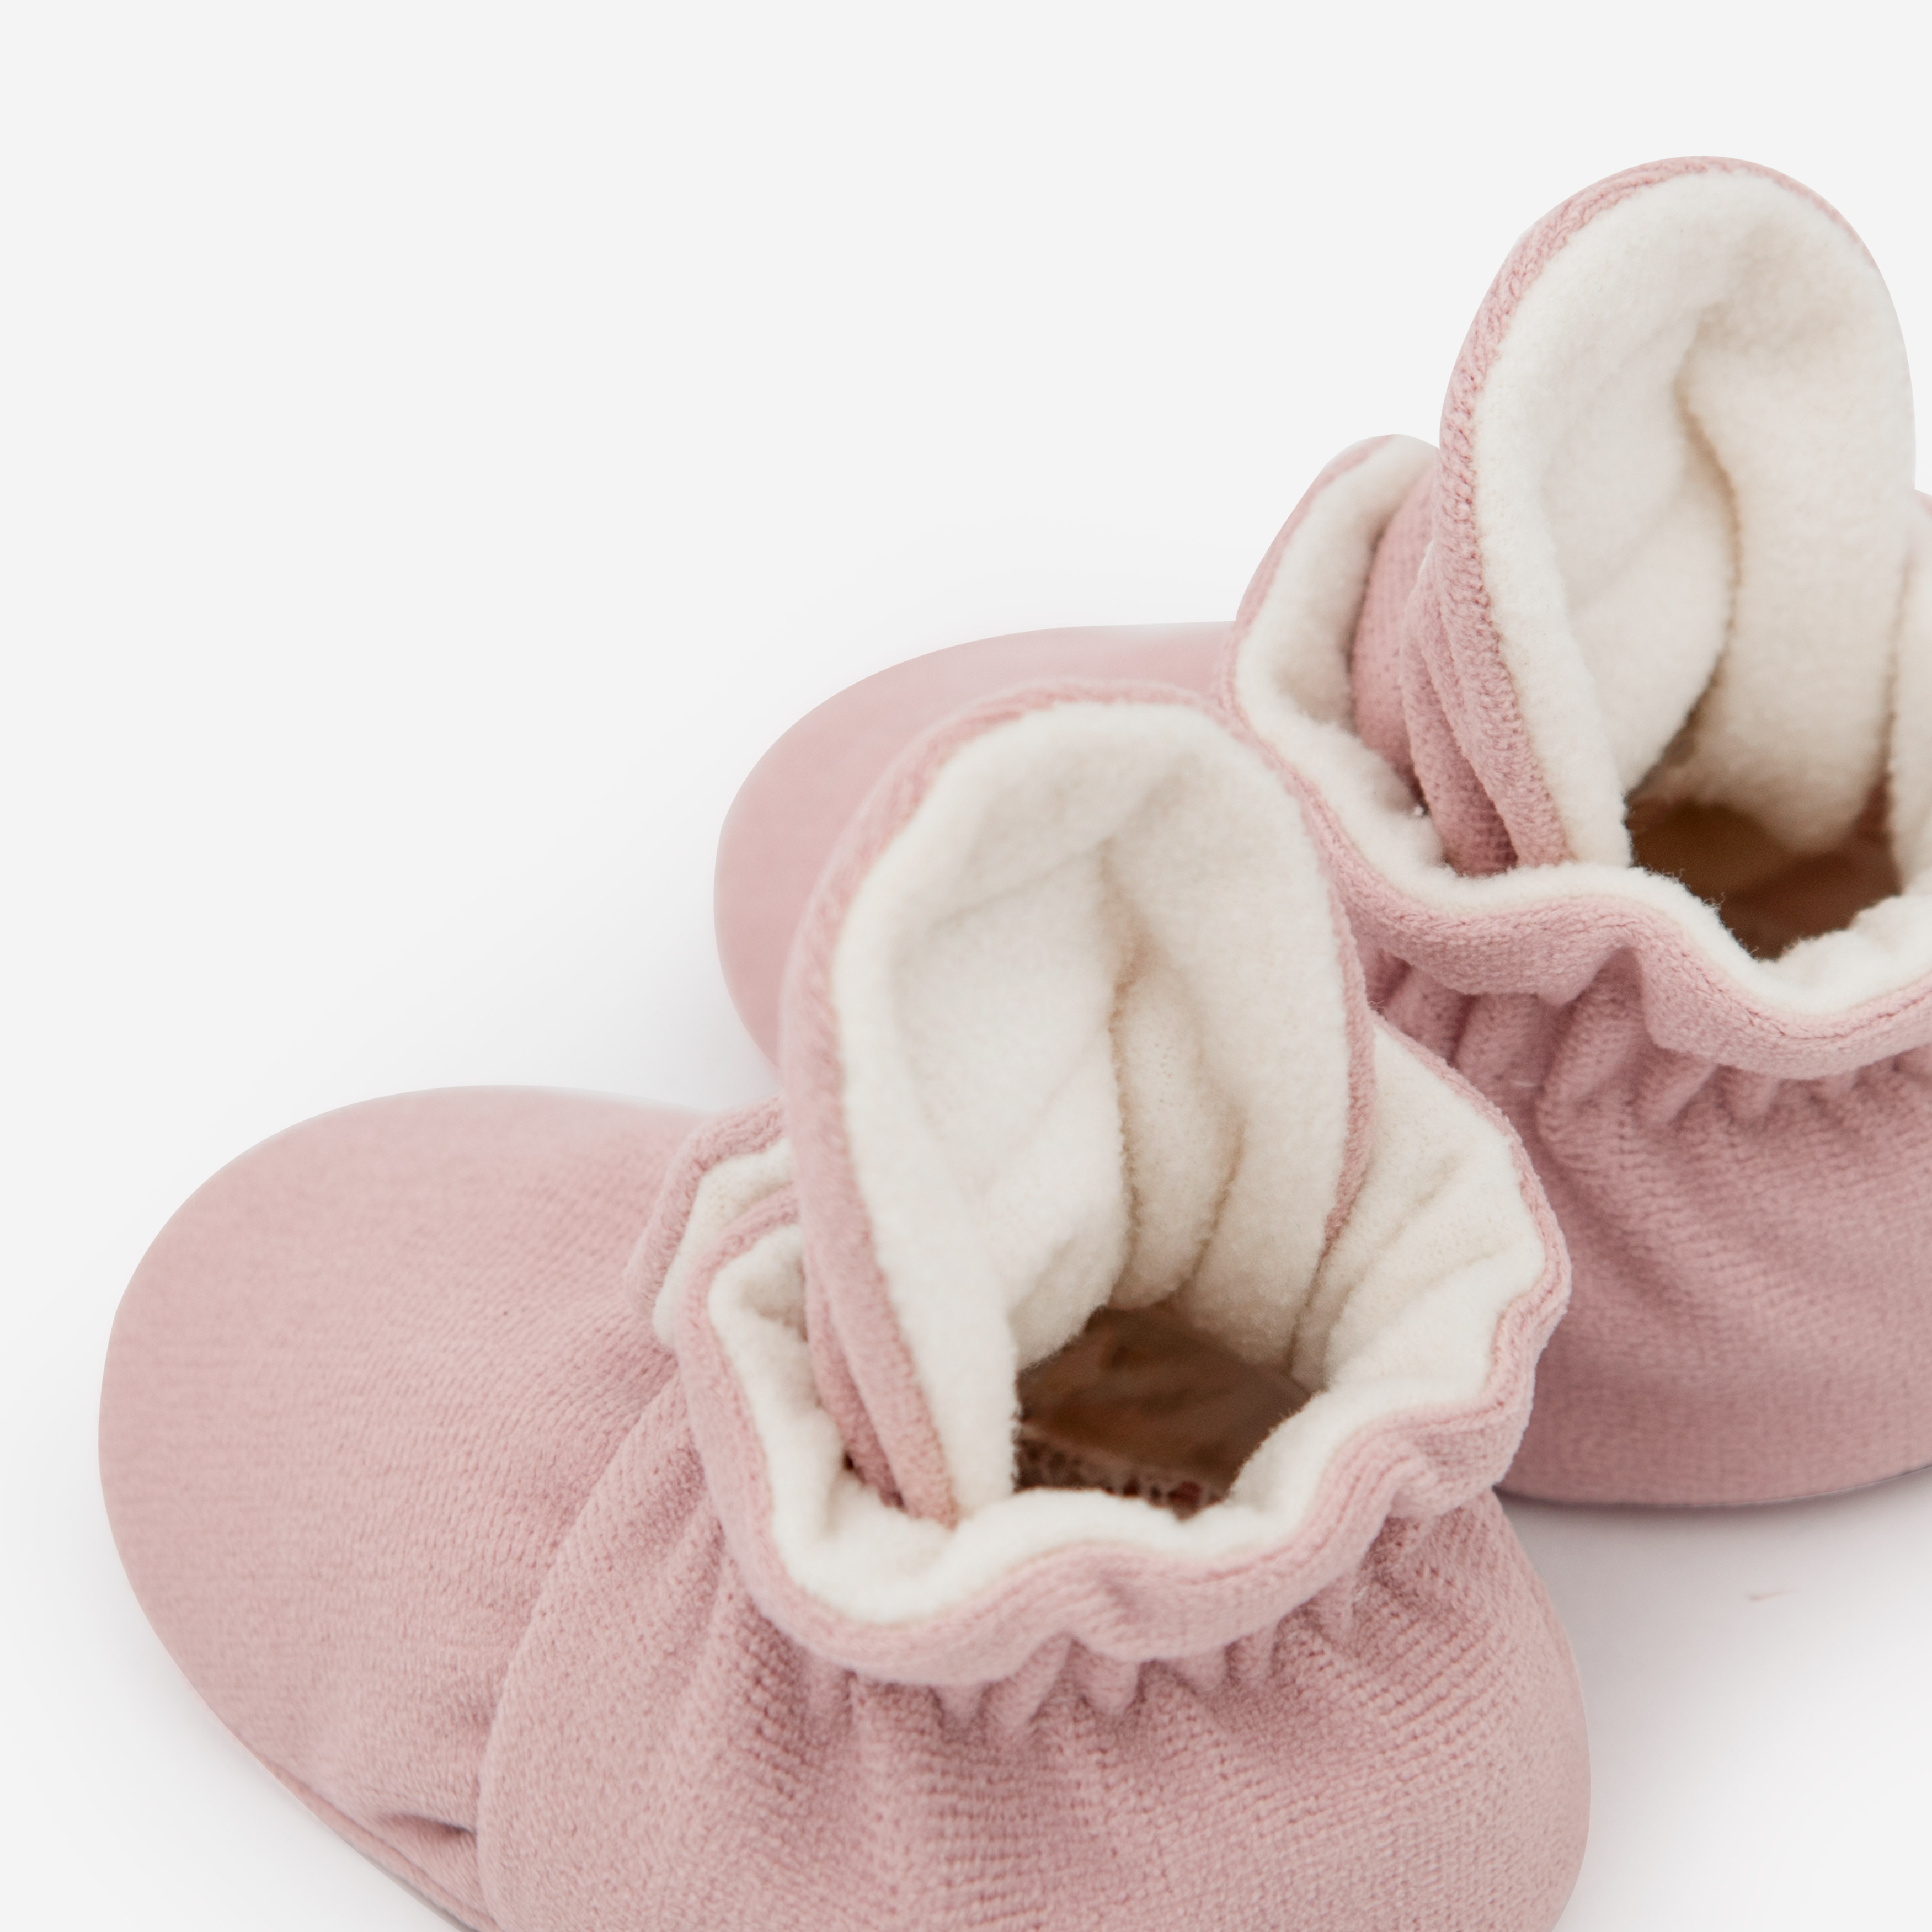 Schuhe & Co Classic/Gamuza rosewood Babyschühchen 6 Monate